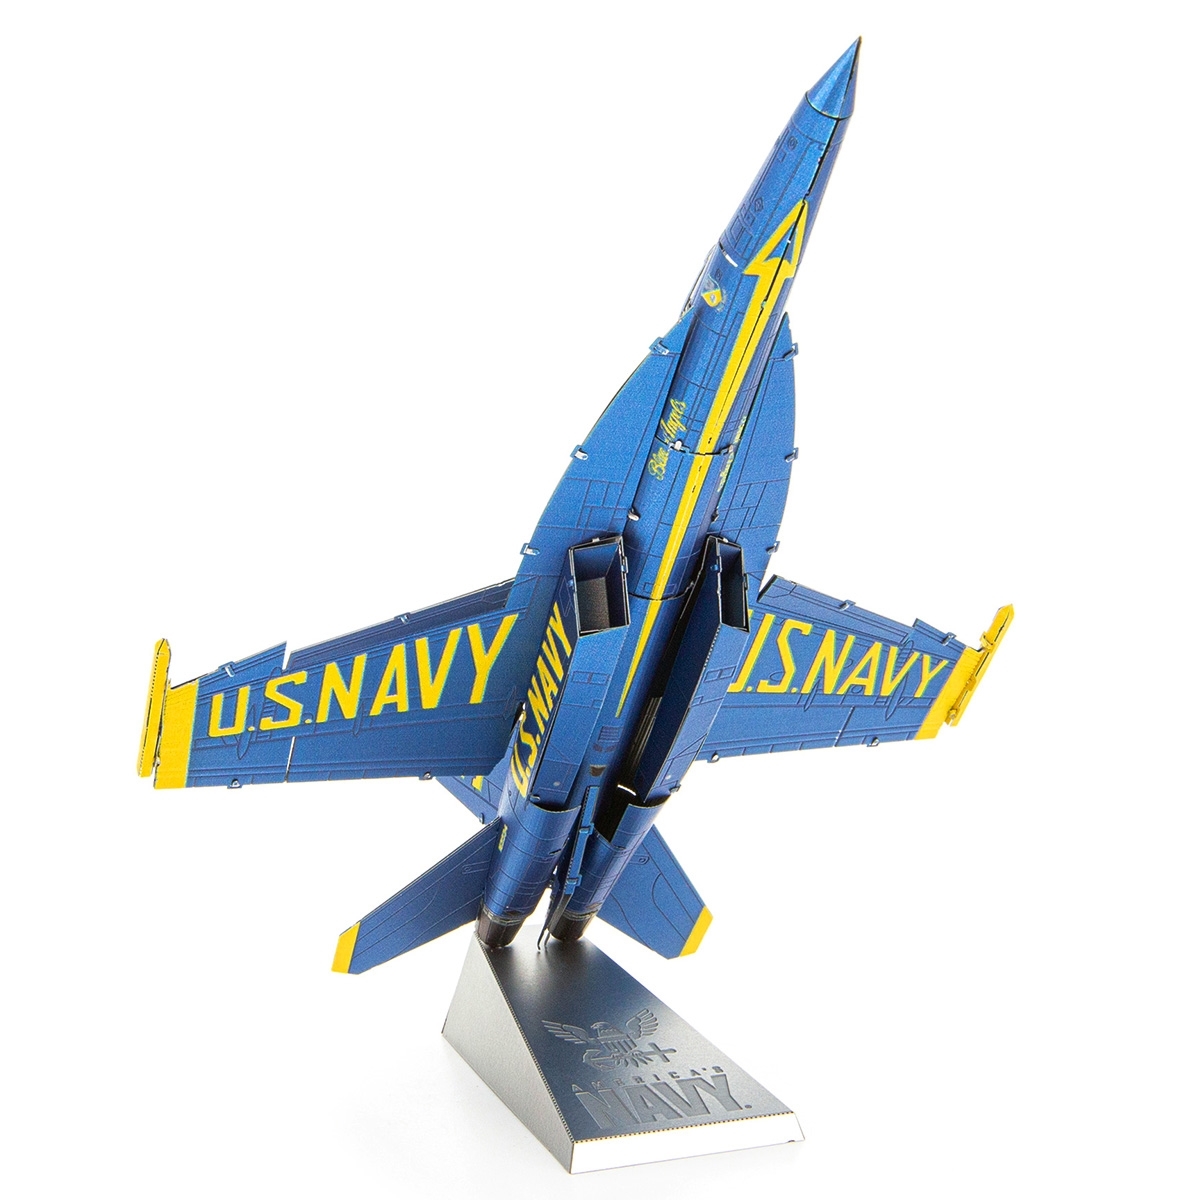 Maisto Fresh Metal vientos de cola. U.S Navy Blue ángulos nuevo! F/A-18 Hornet 